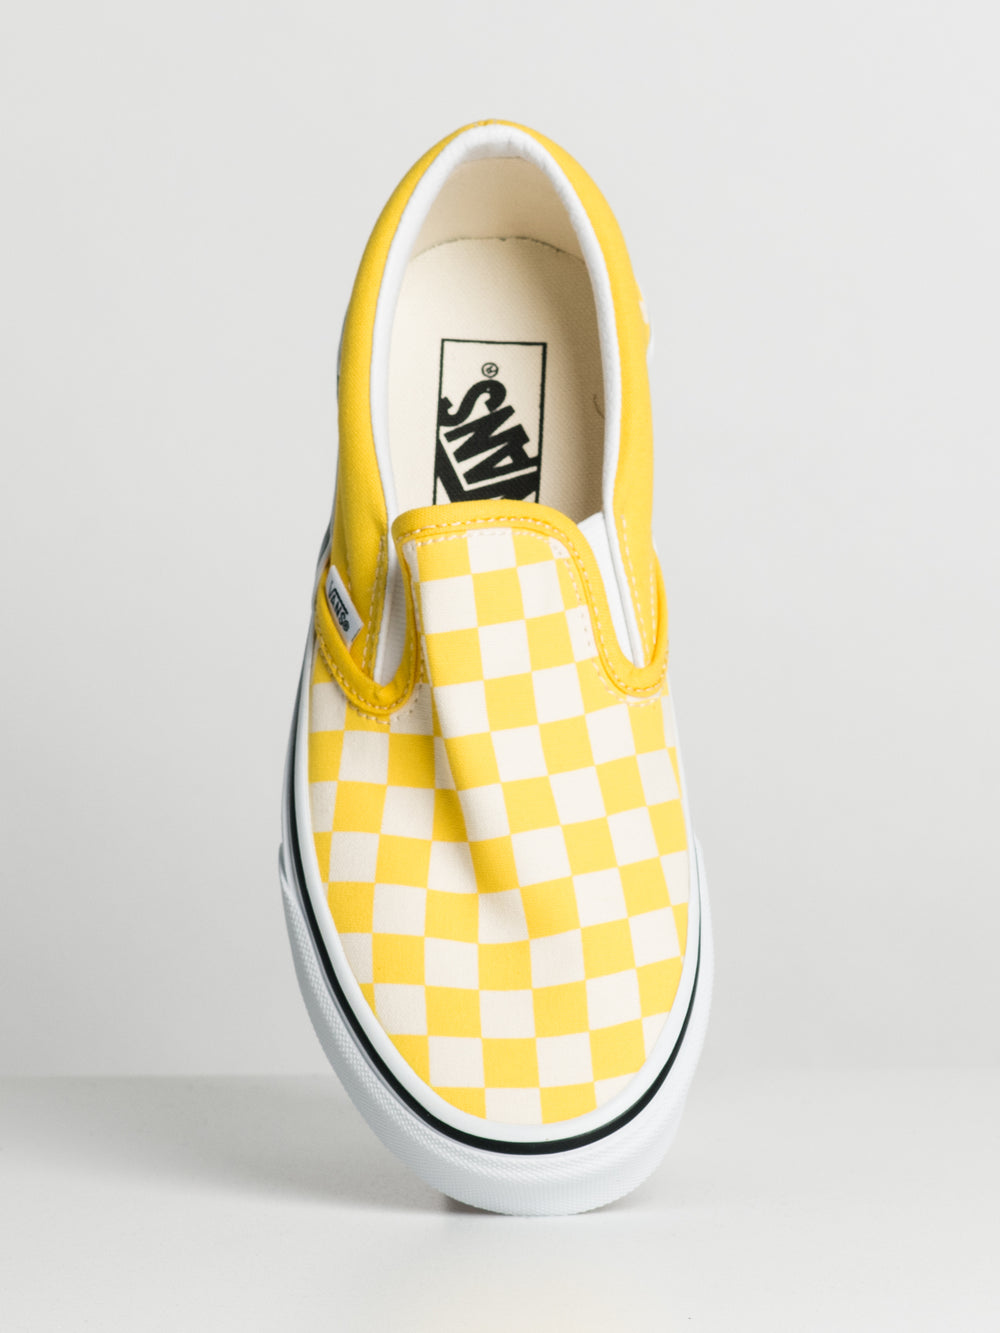 VANS Checkerboard Yellow & True White Womens Slip-On Shoes